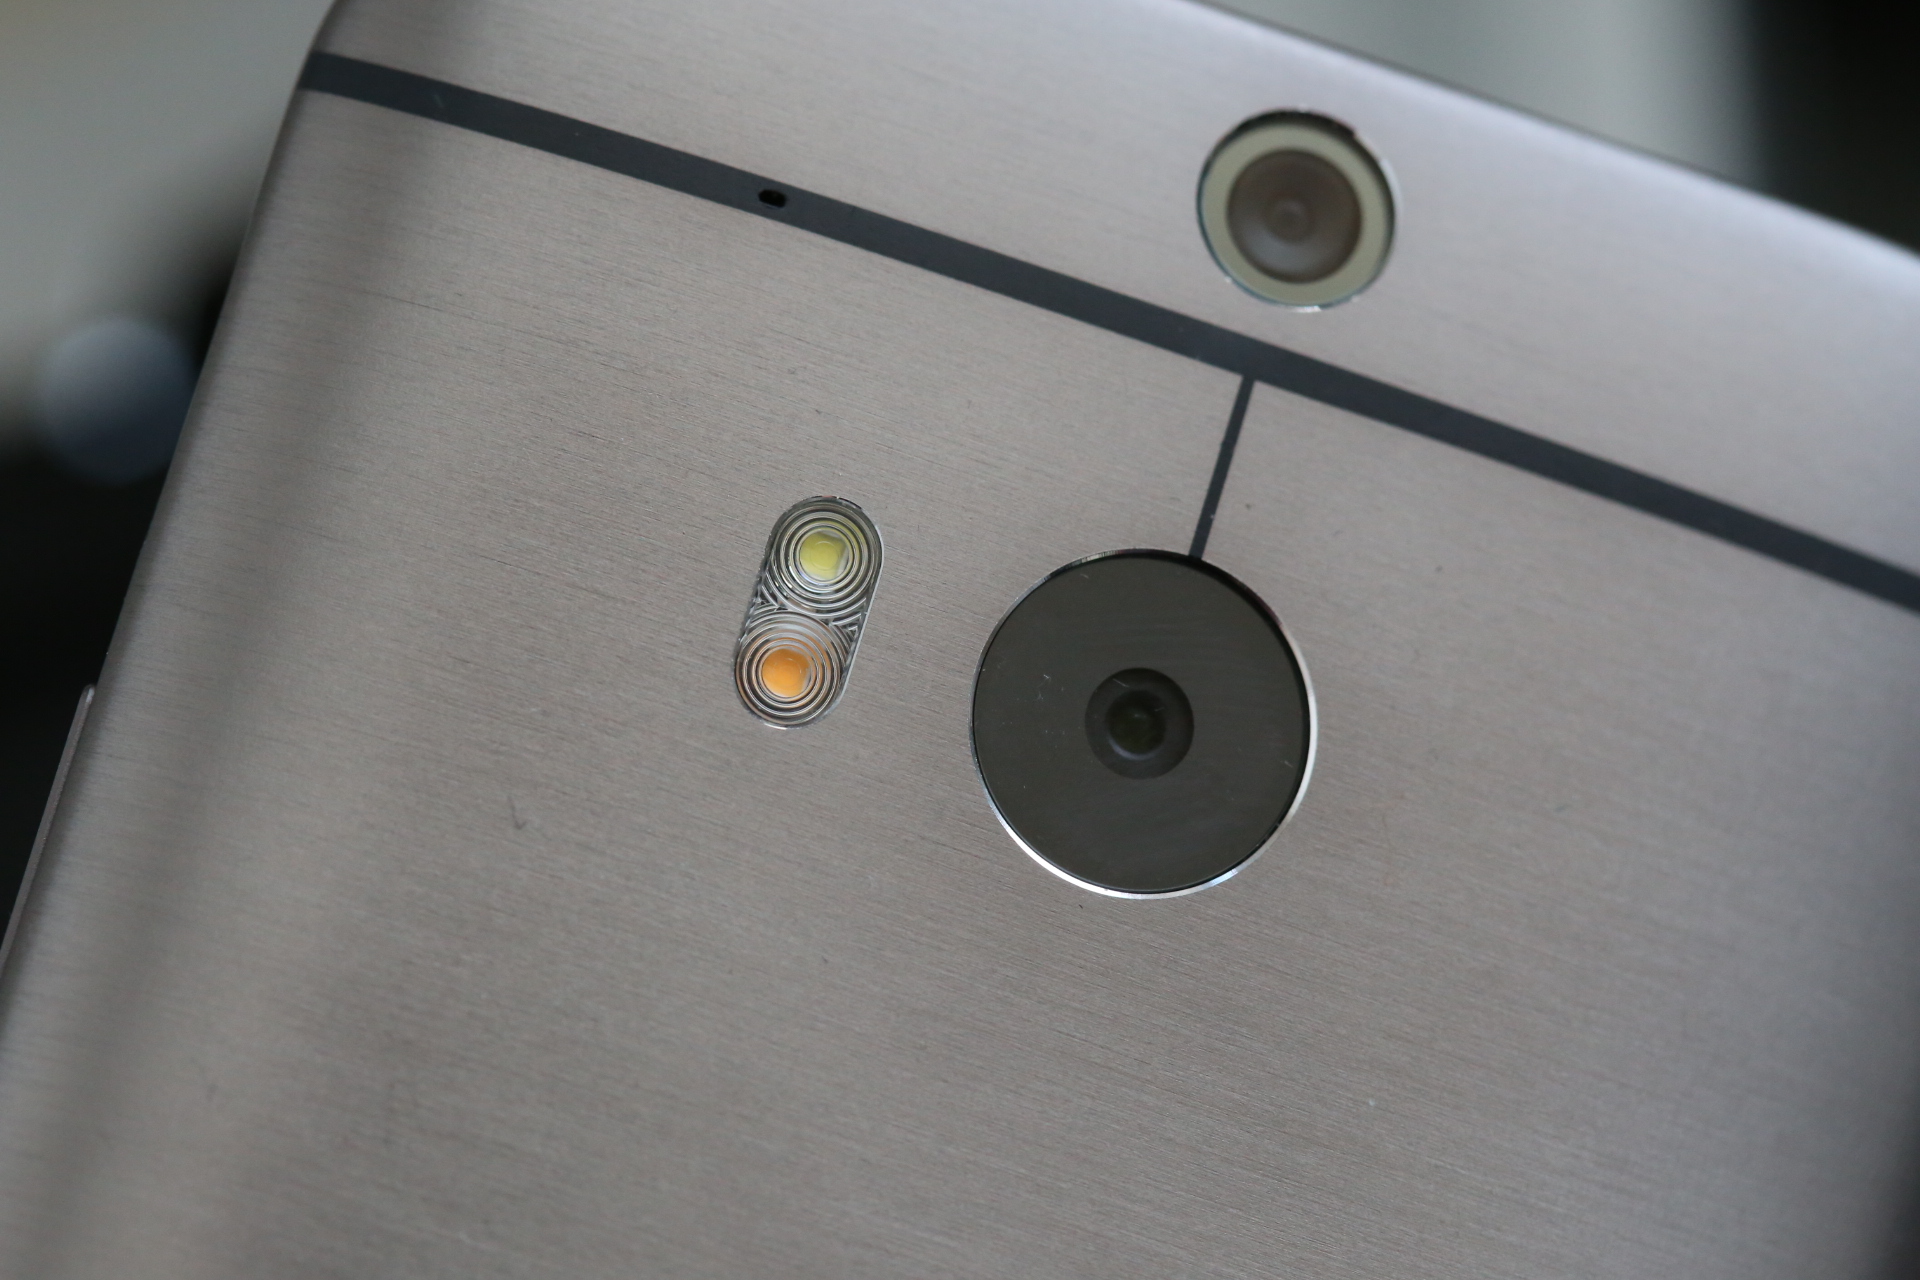 HTC-One-M8-camera-detail